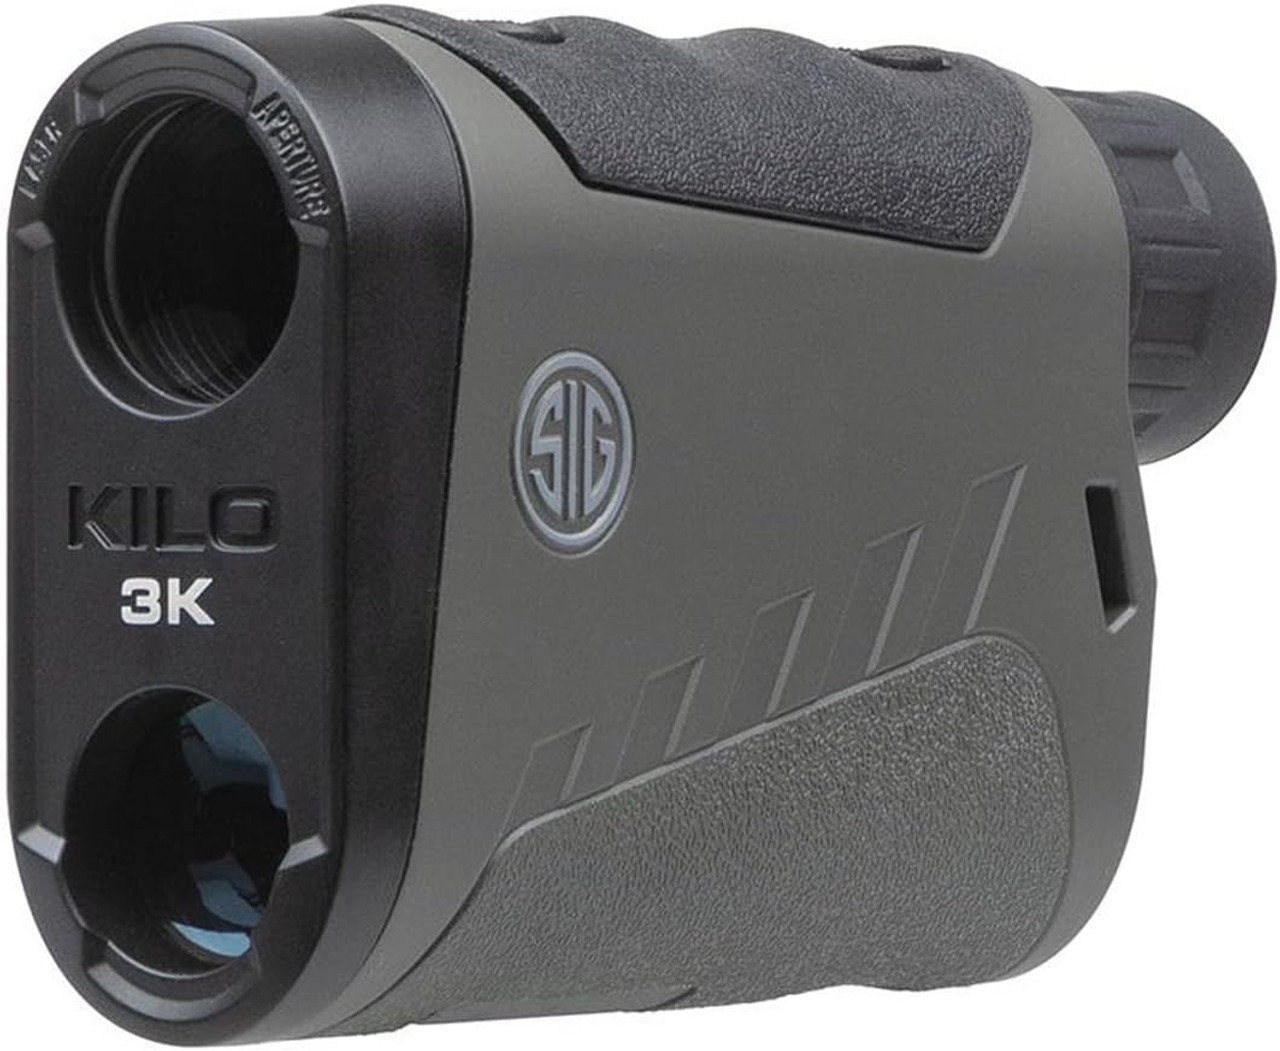 SIG SAUER KILO3K 6X22MM Compact Waterproof Accurate Laser Rangefinder